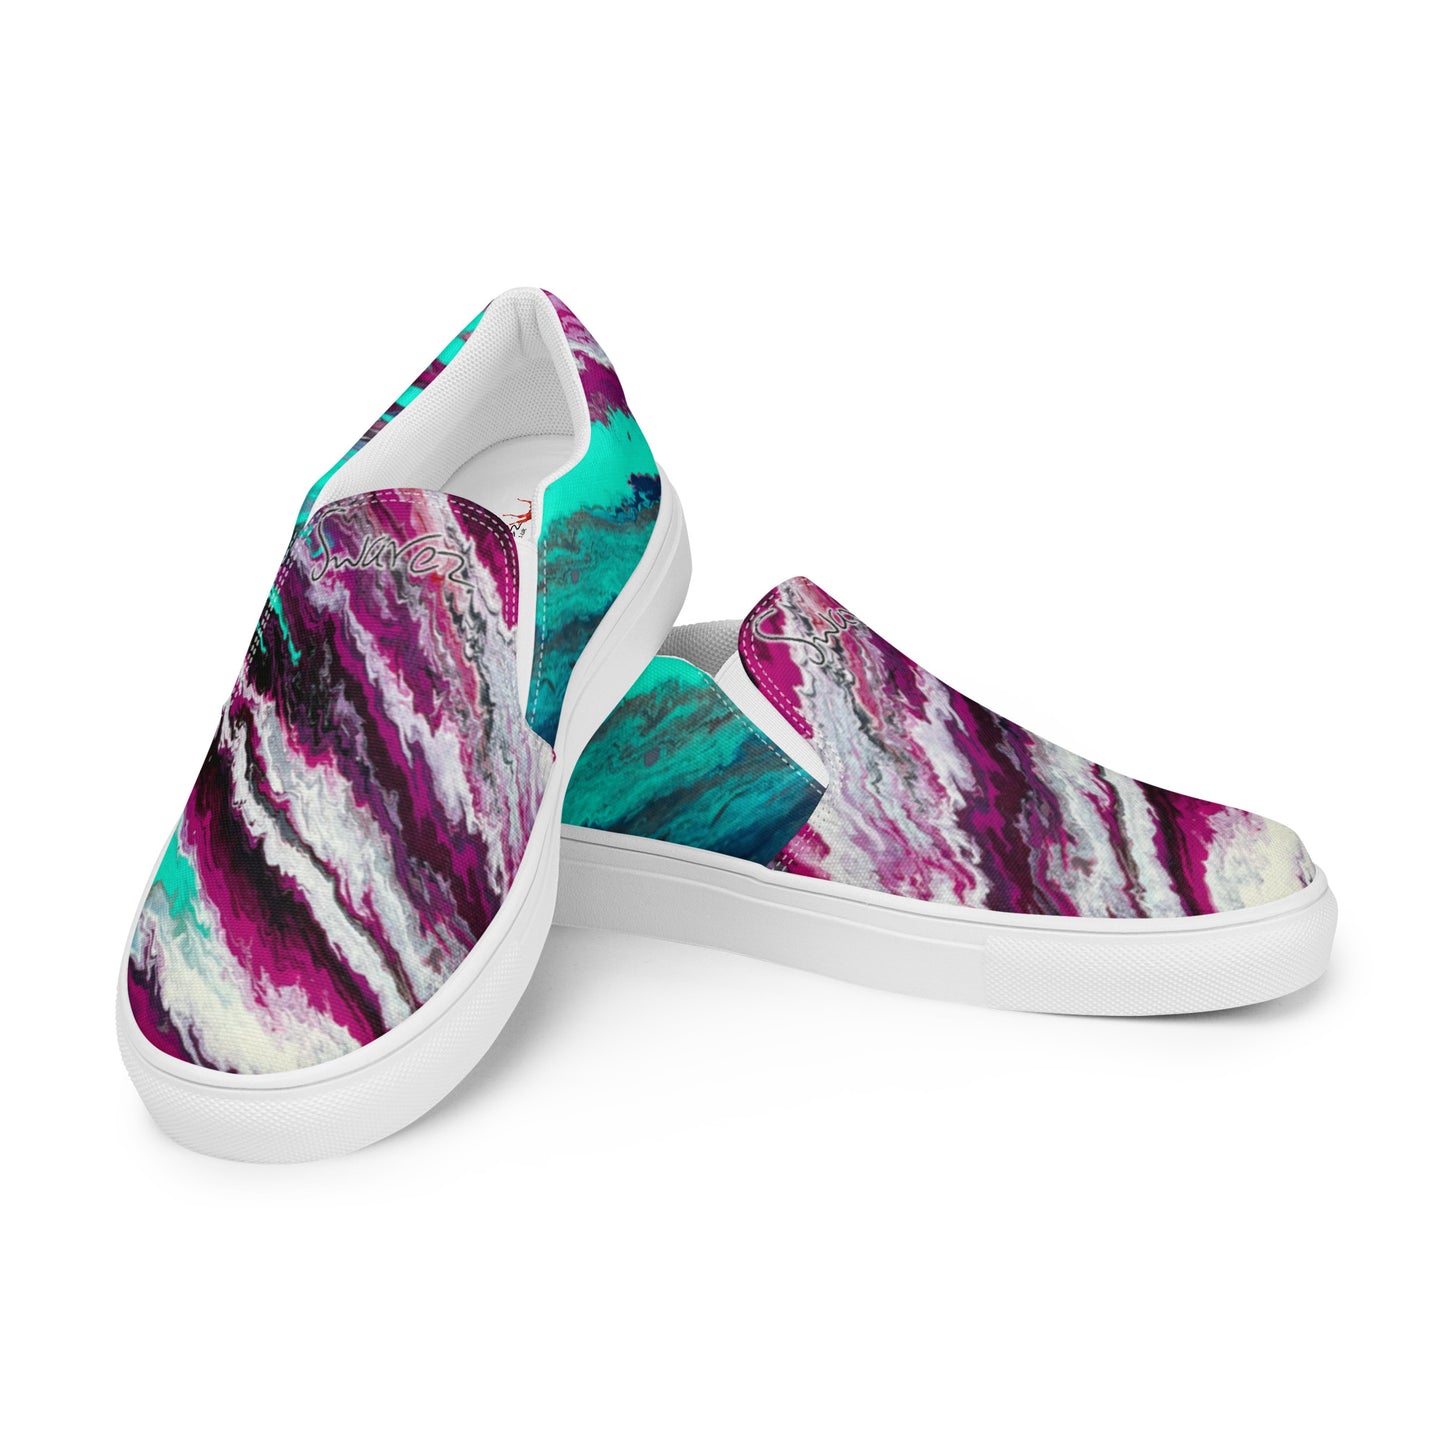 Women’s slip-on canvas shoes - Neon Canyon design